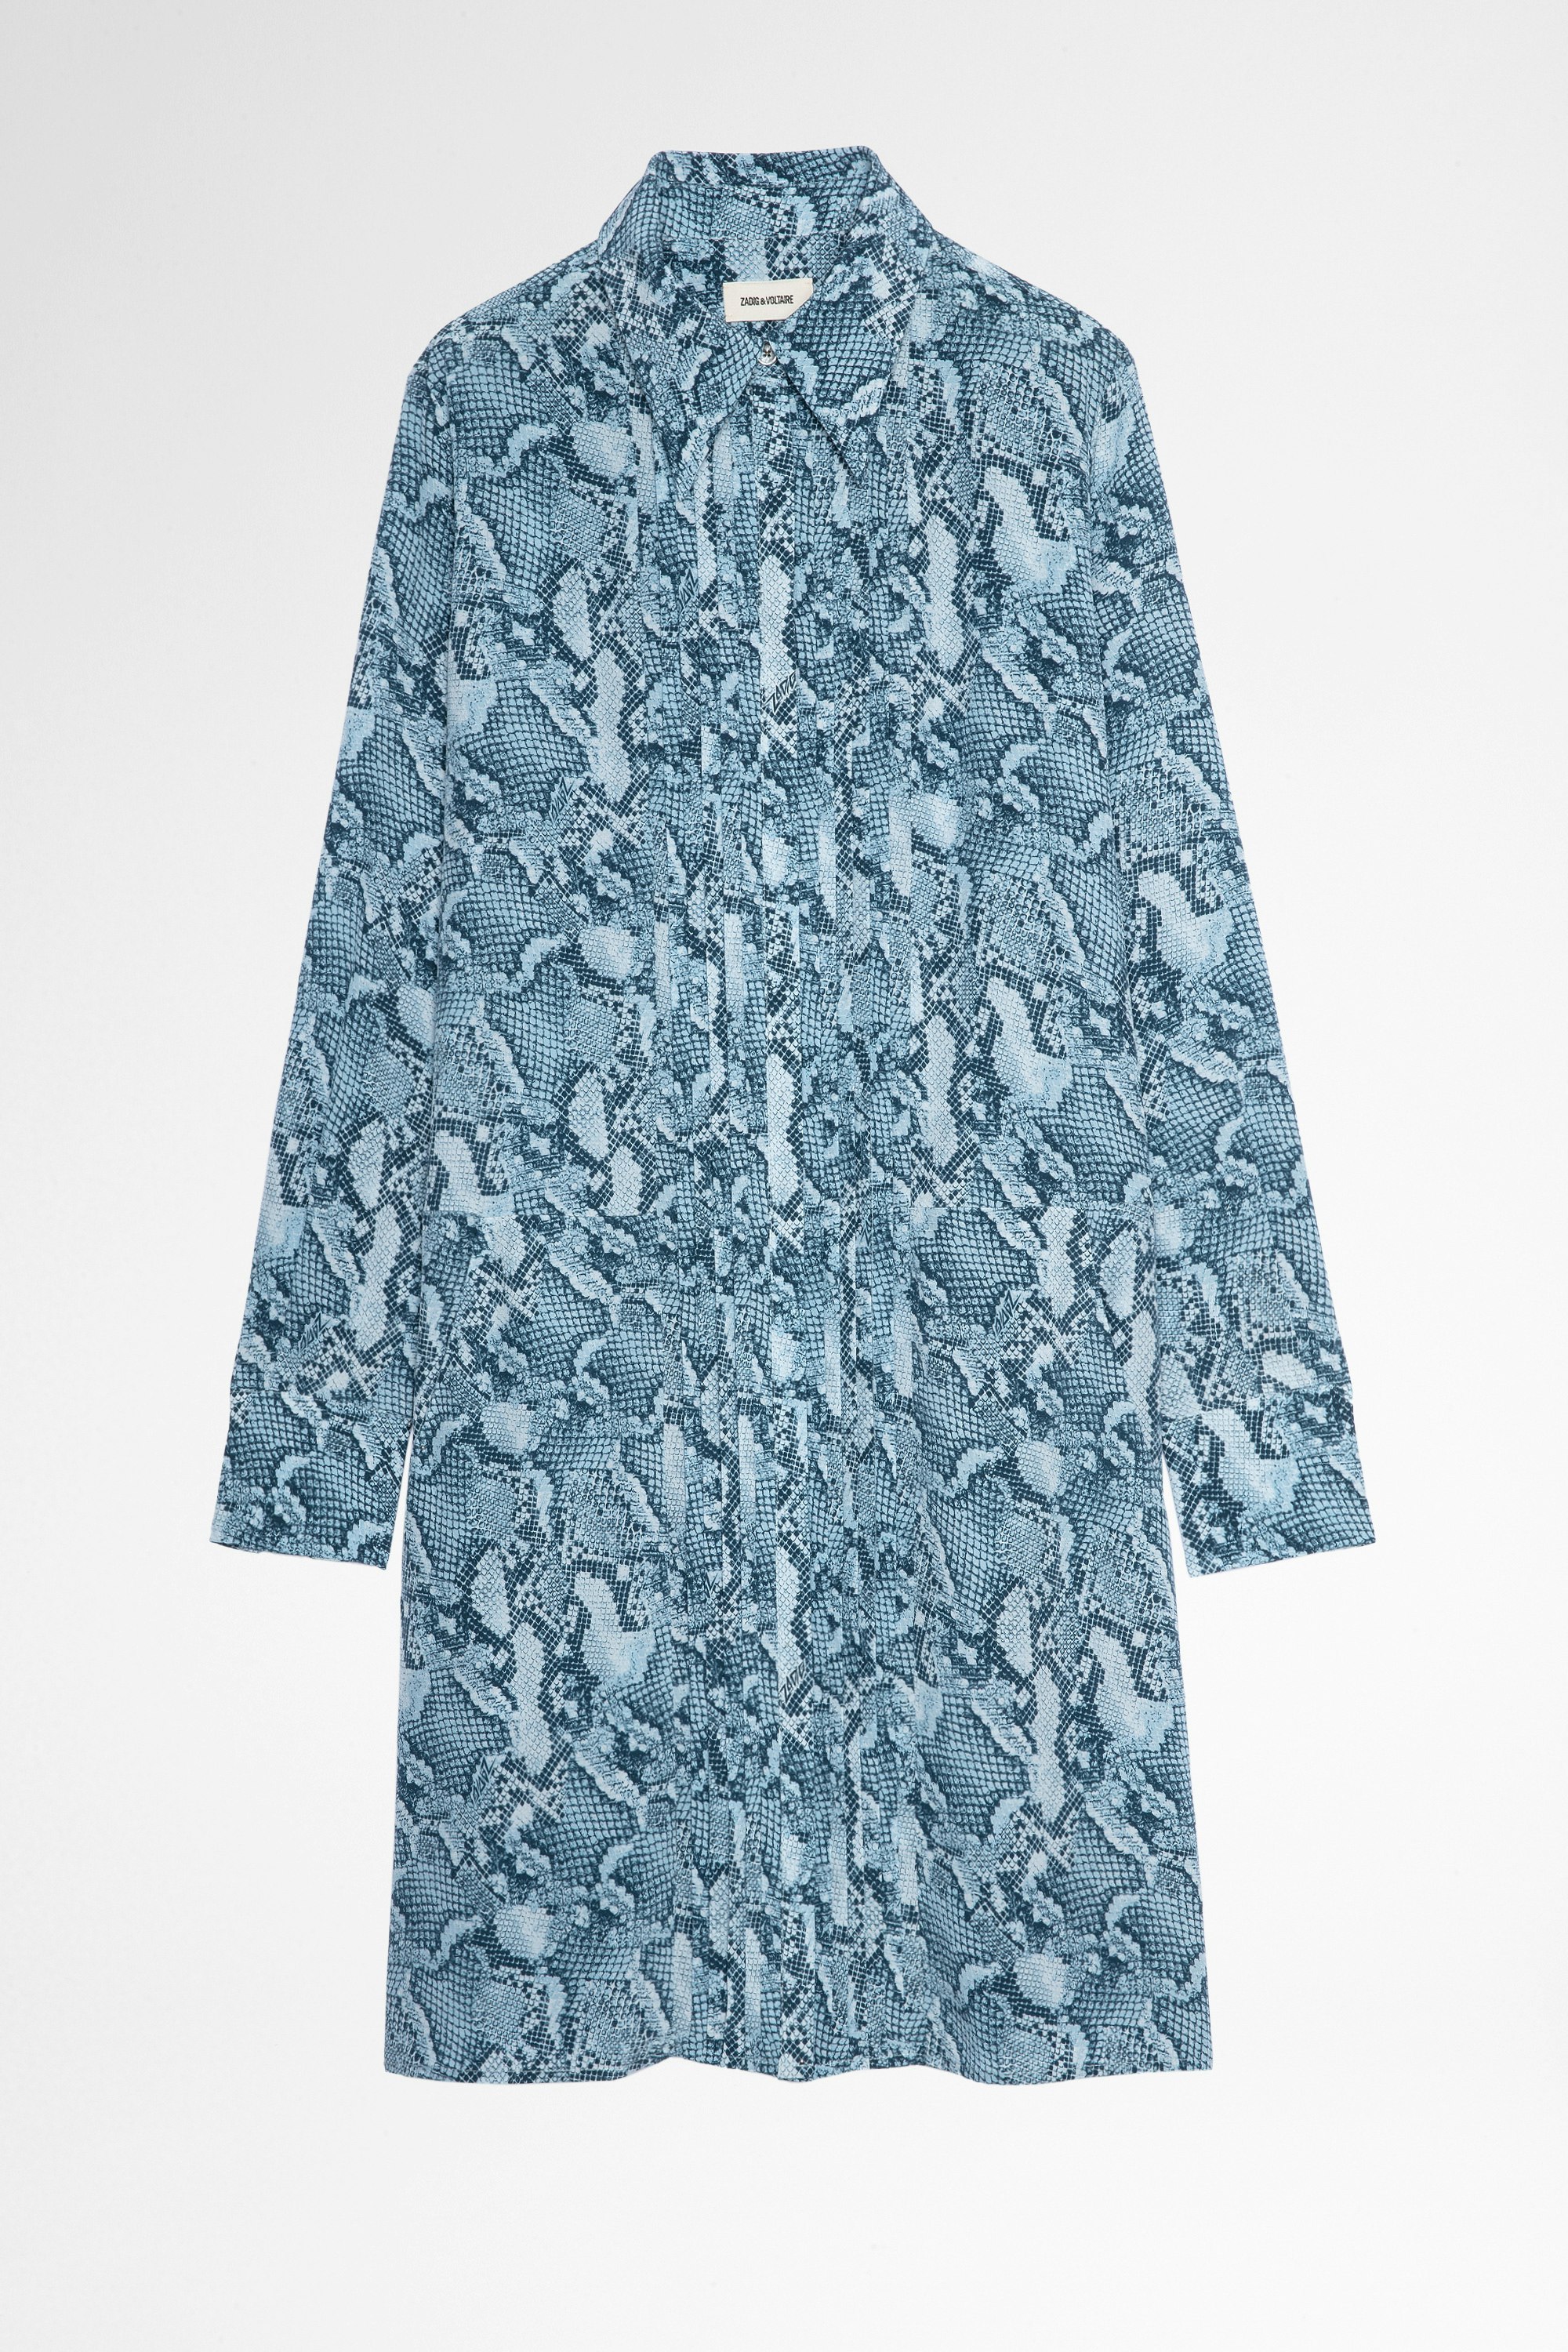 Rougi シルク ドレス Women's shirt dress in blue silk with snake print